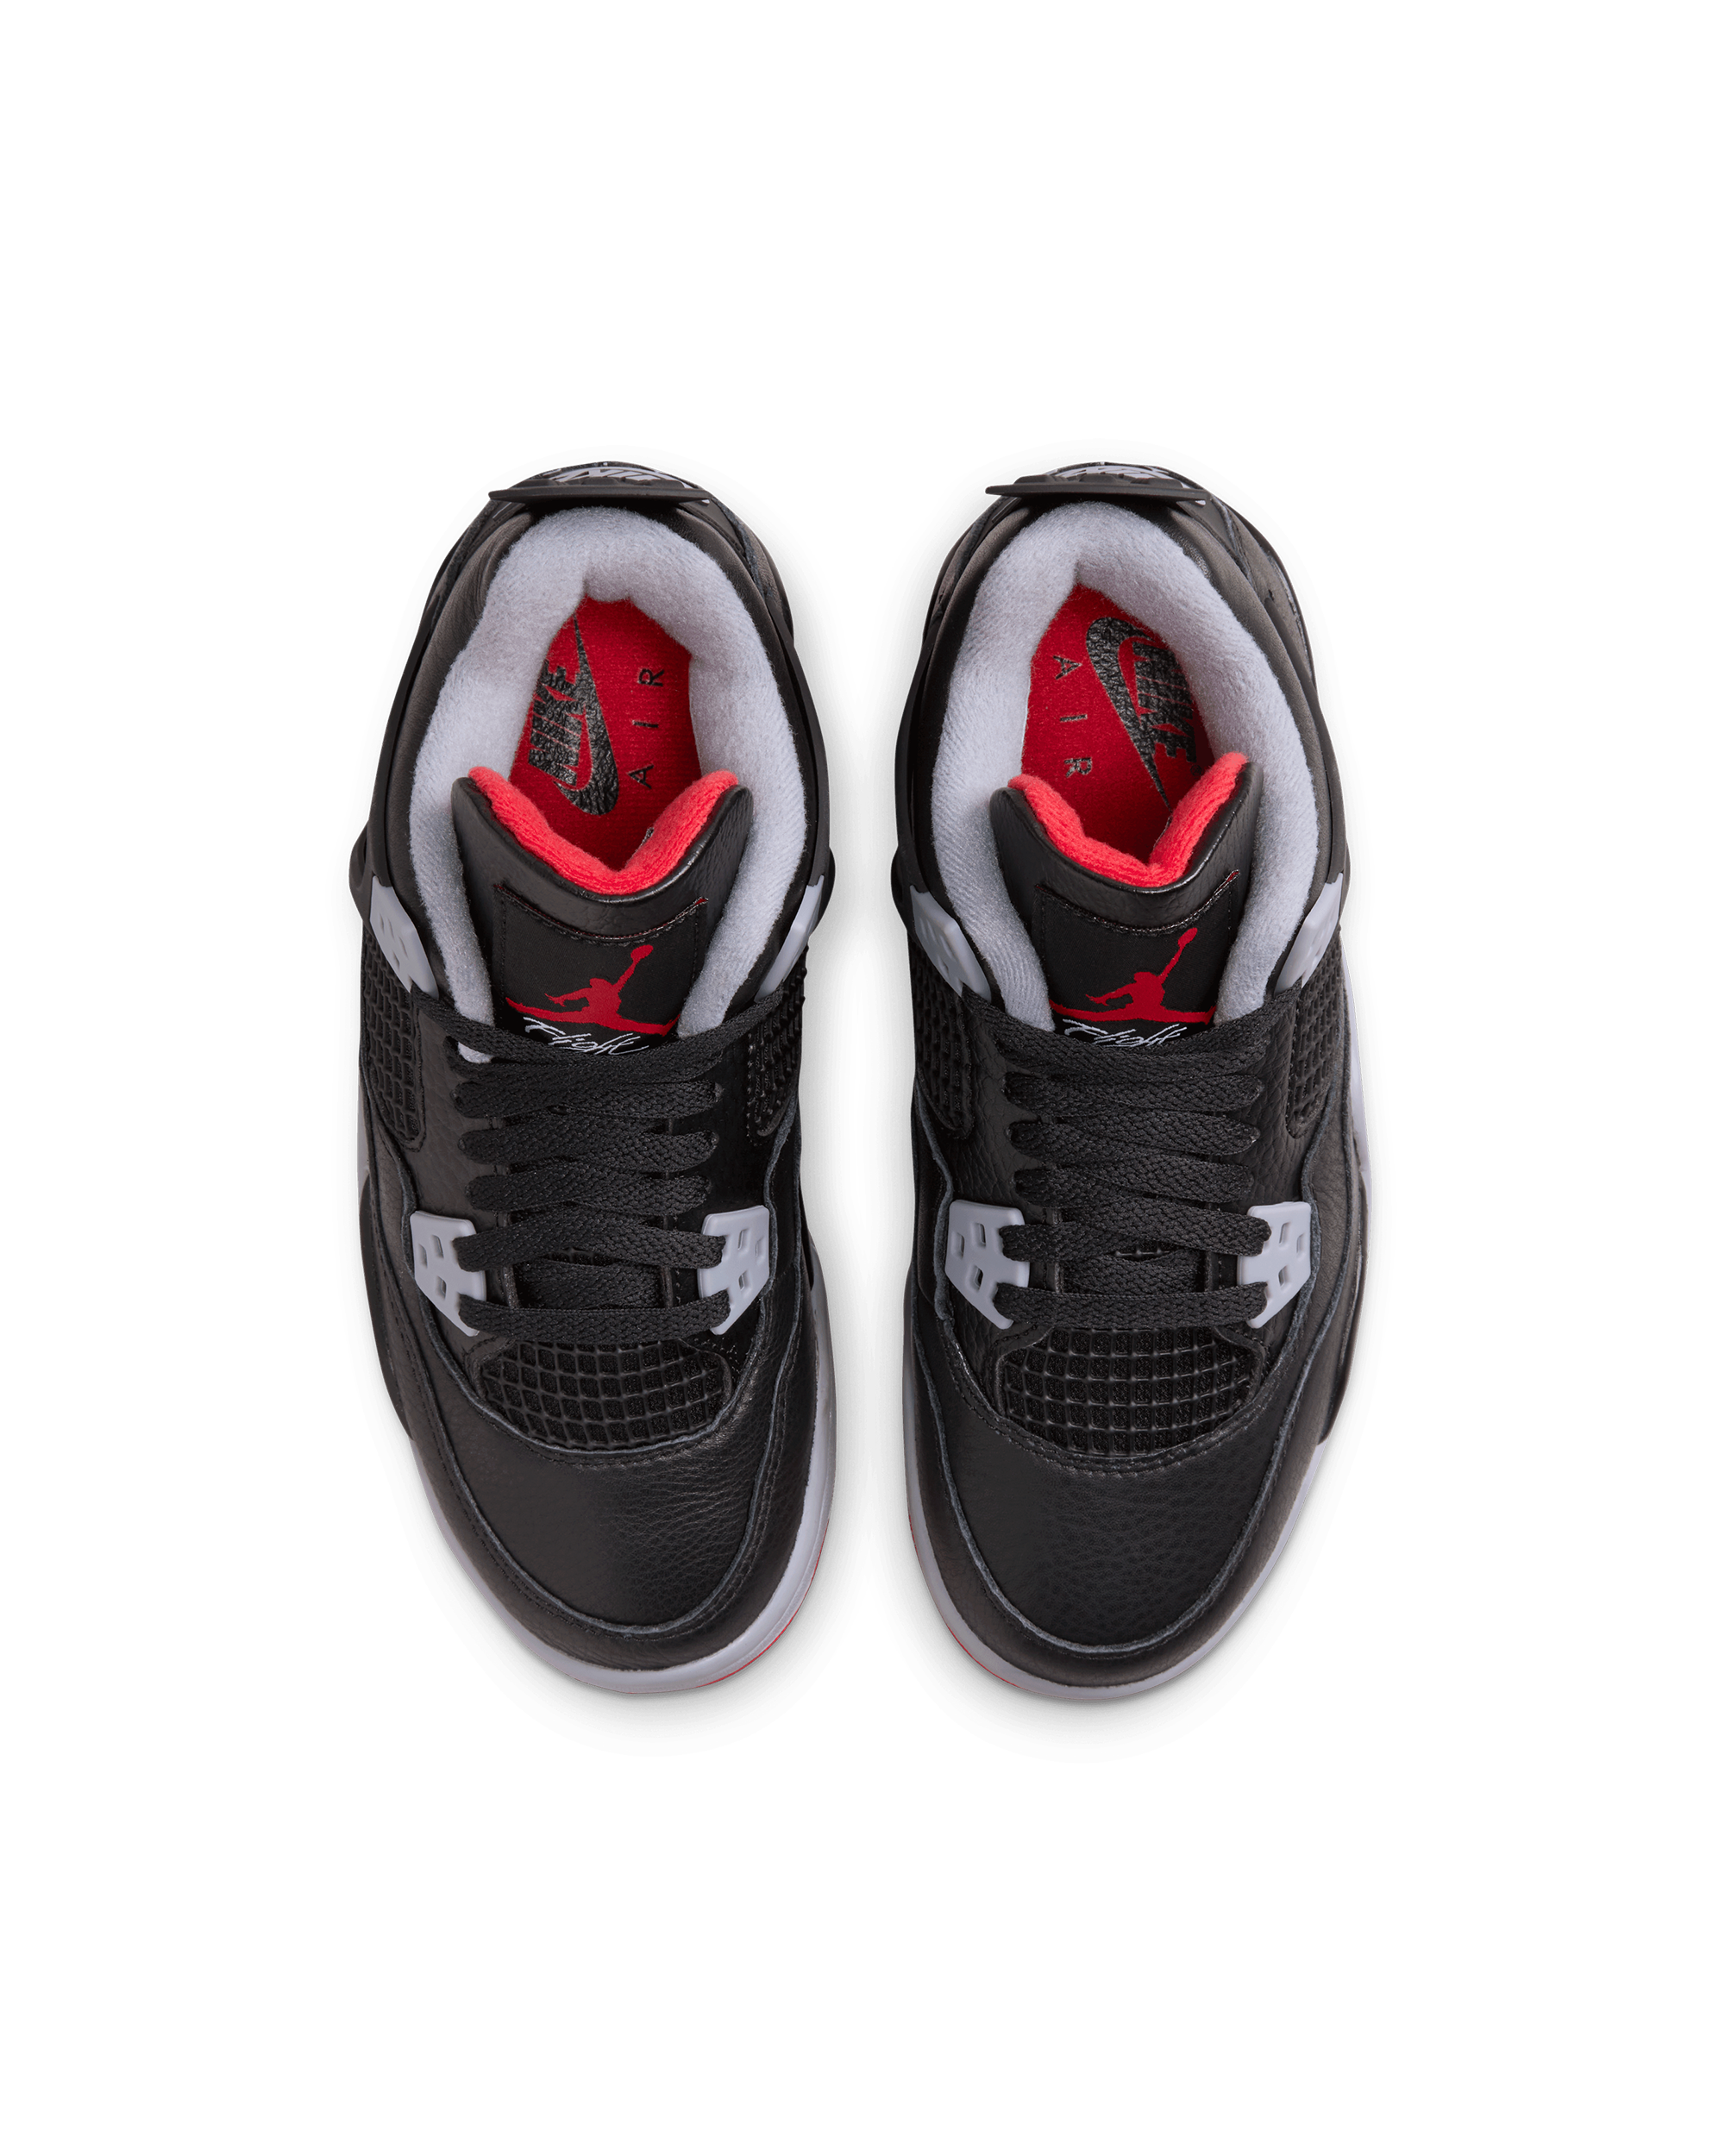 Air Jordan 4 Retro "Bred Reimagined" - Black / Fire Red / Grey / White